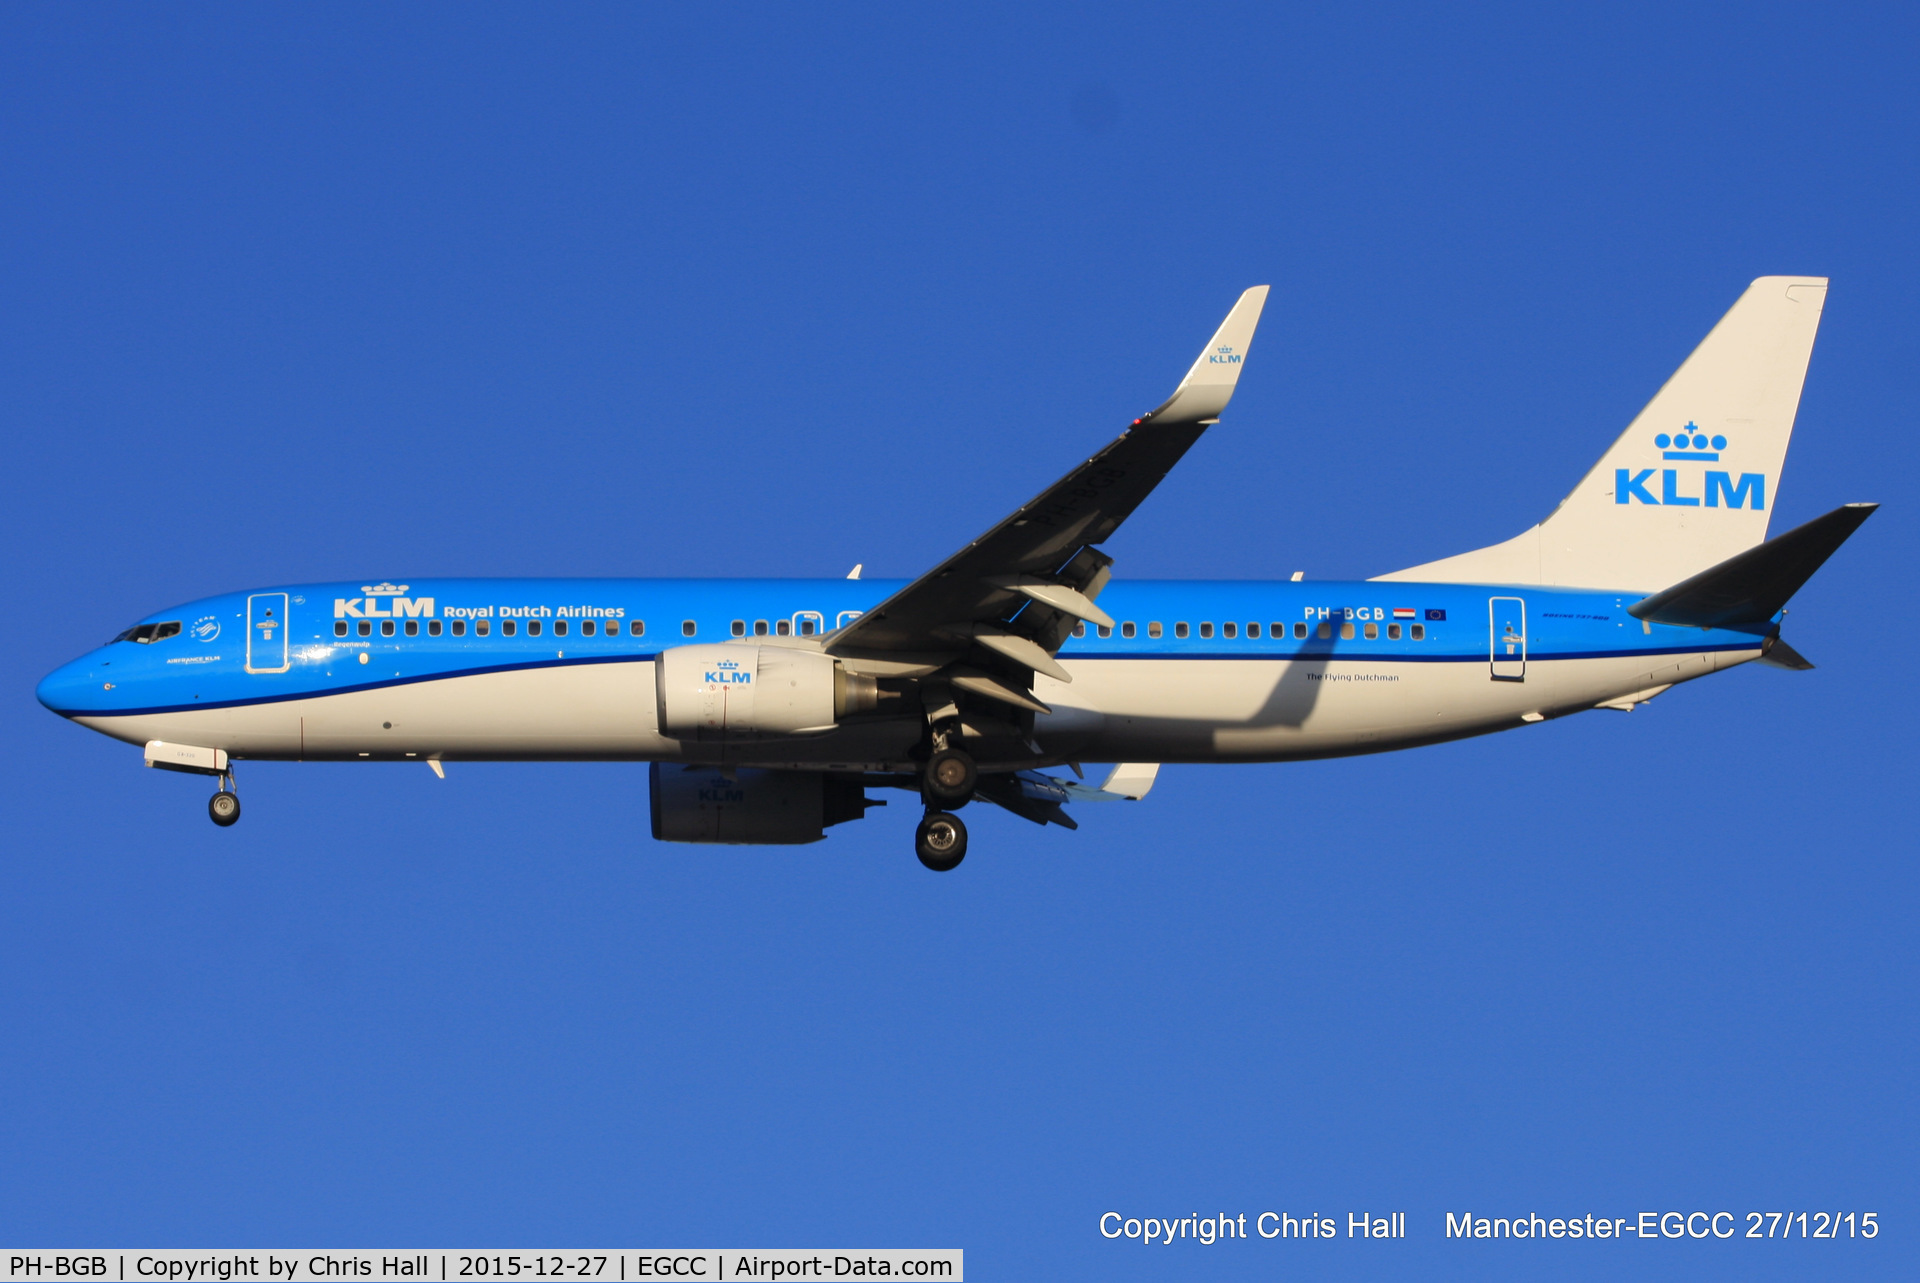 PH-BGB, 2008 Boeing 737-8K2 C/N 37594, KLM Royal Dutch Airlines